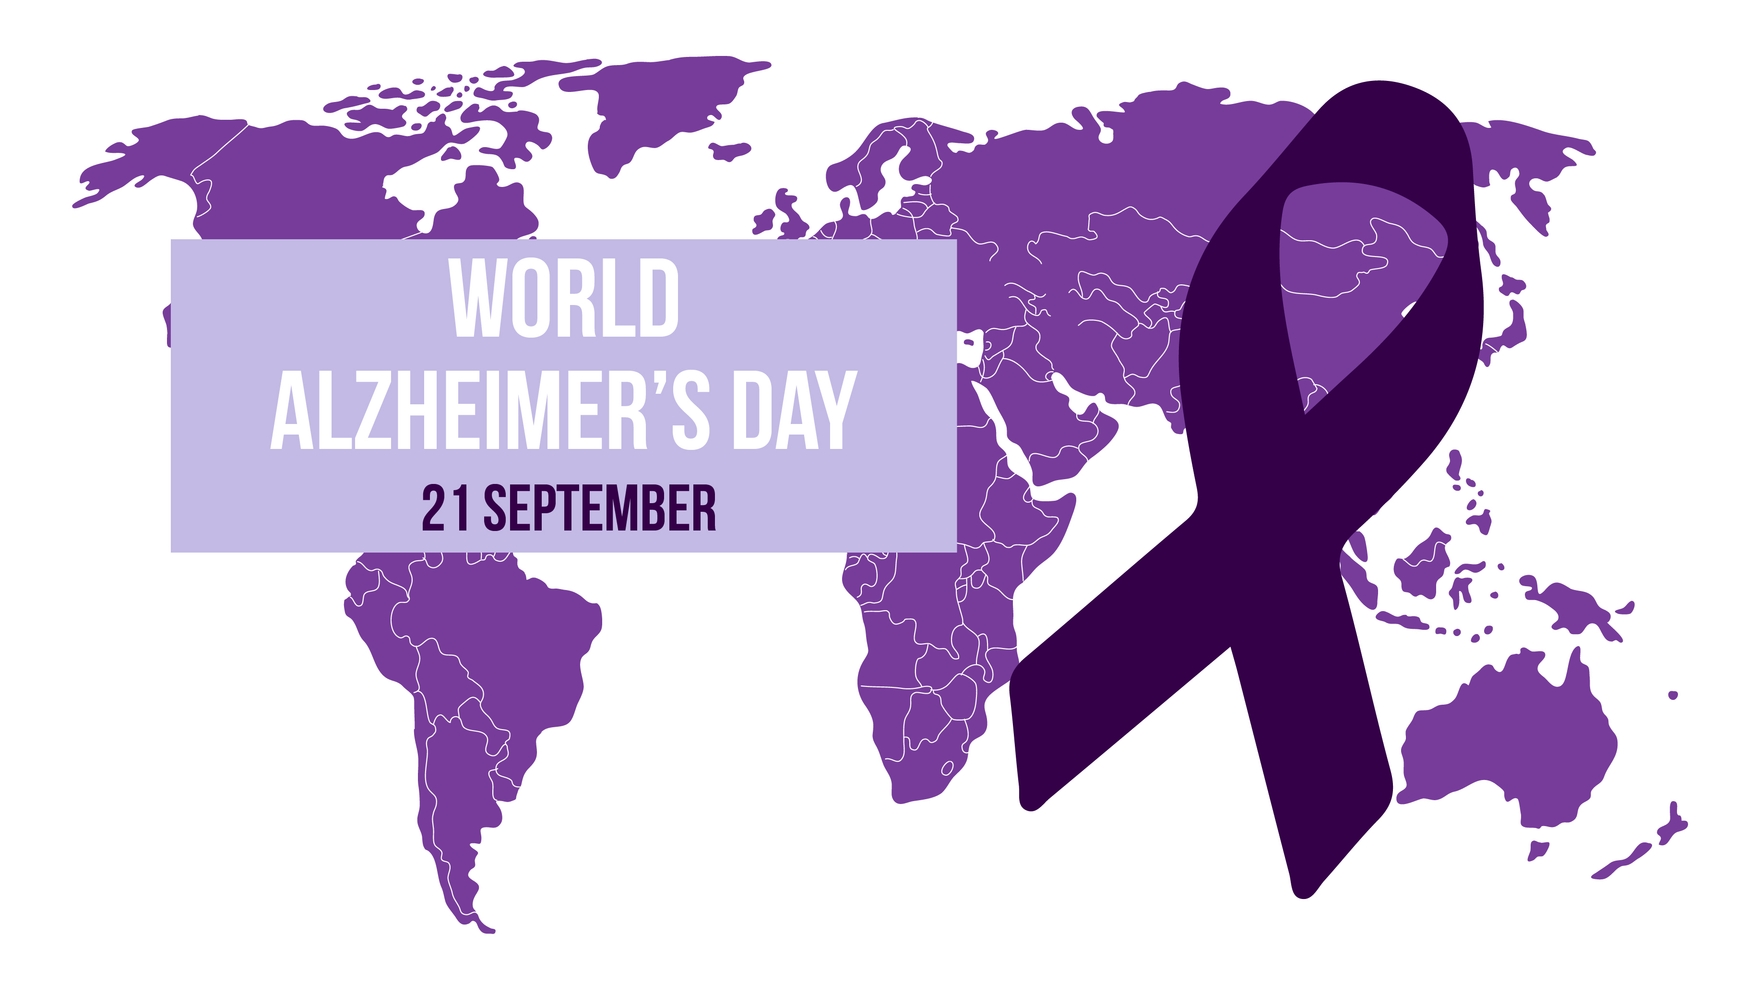 World Alzheimer’s Day Image Background